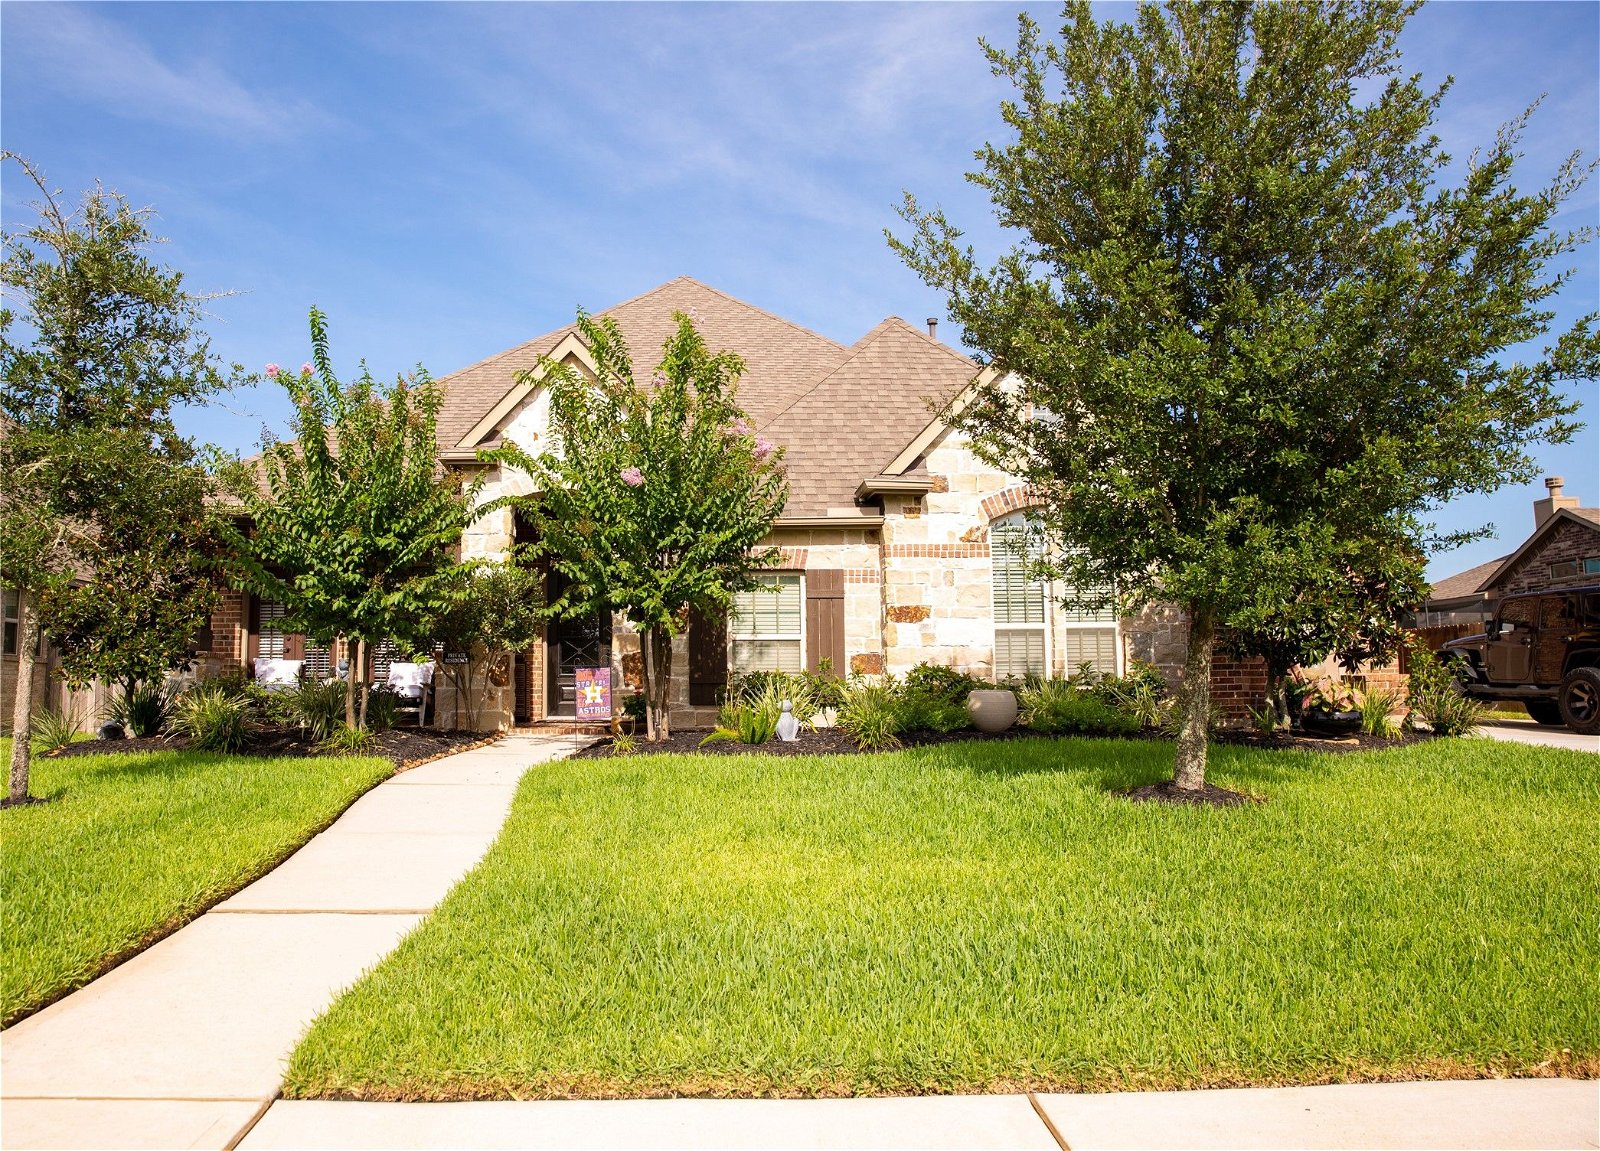 Real estate property located at 18006 Calavatra, Harris, Bridges/Lk Houston Sec 4, Houston, TX, US